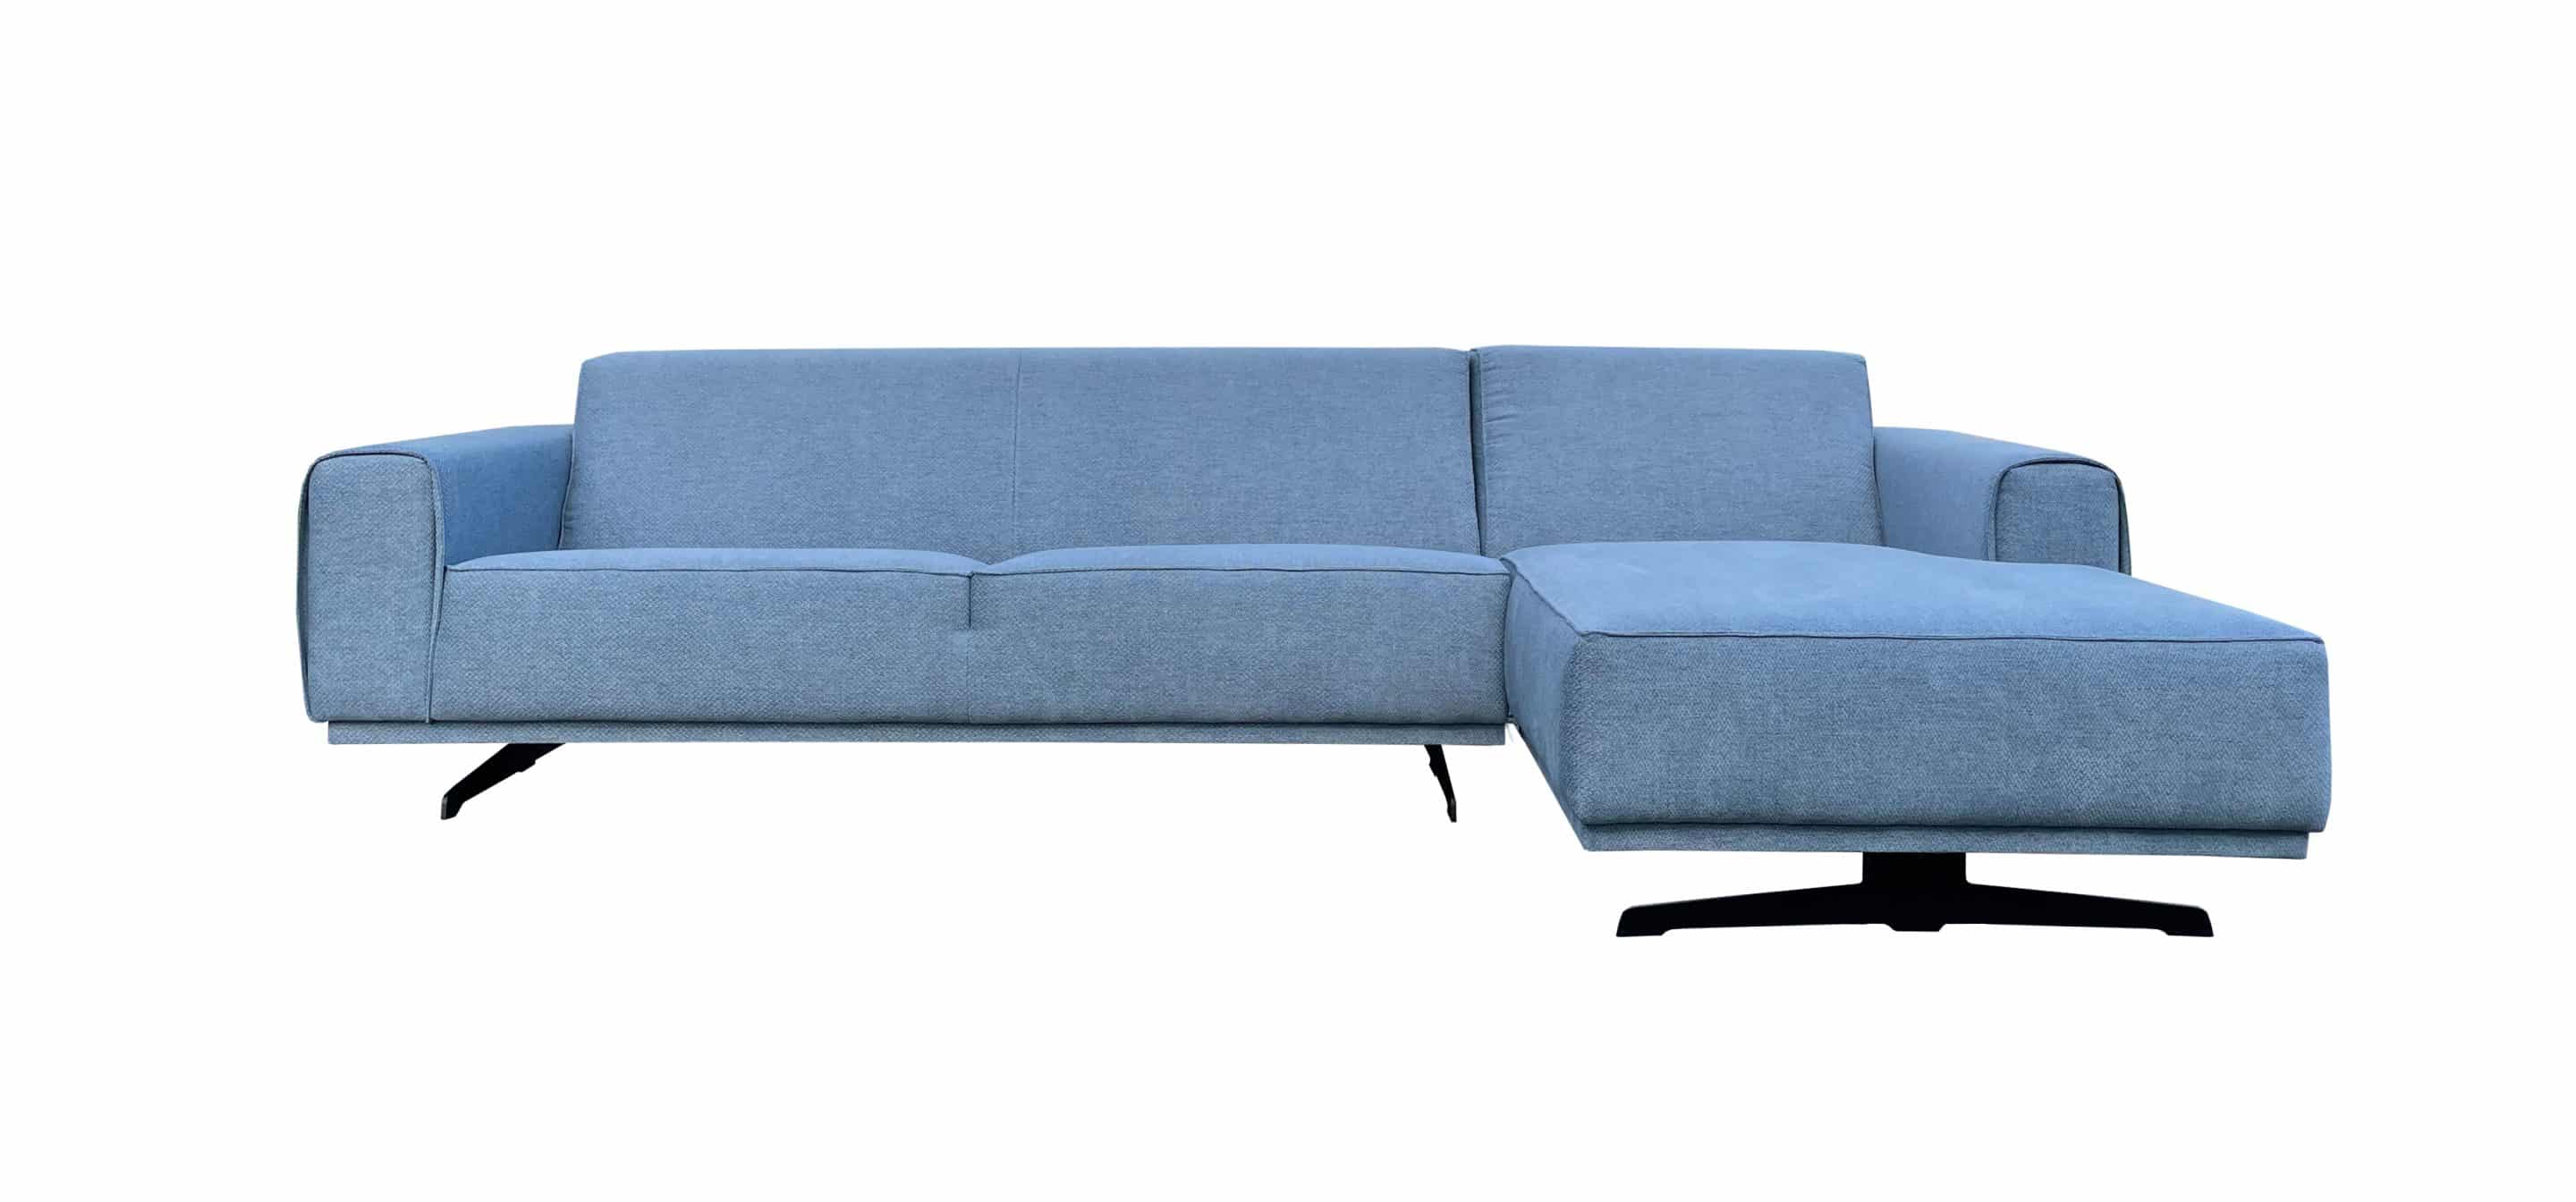 Loungebank Mark chaise longue in blauwe stof met zwarte slede poten